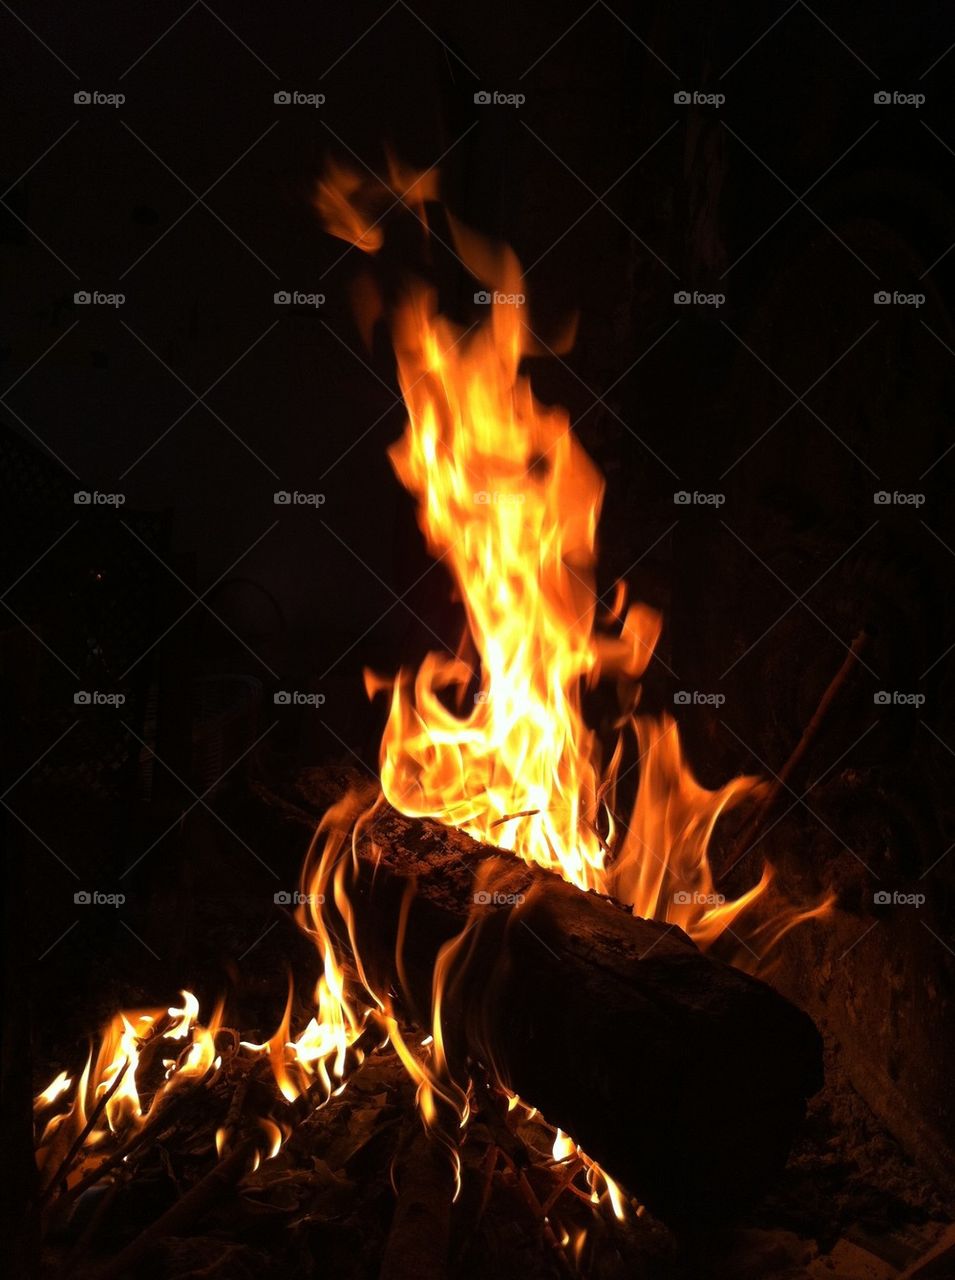 Burning logs in fireplace